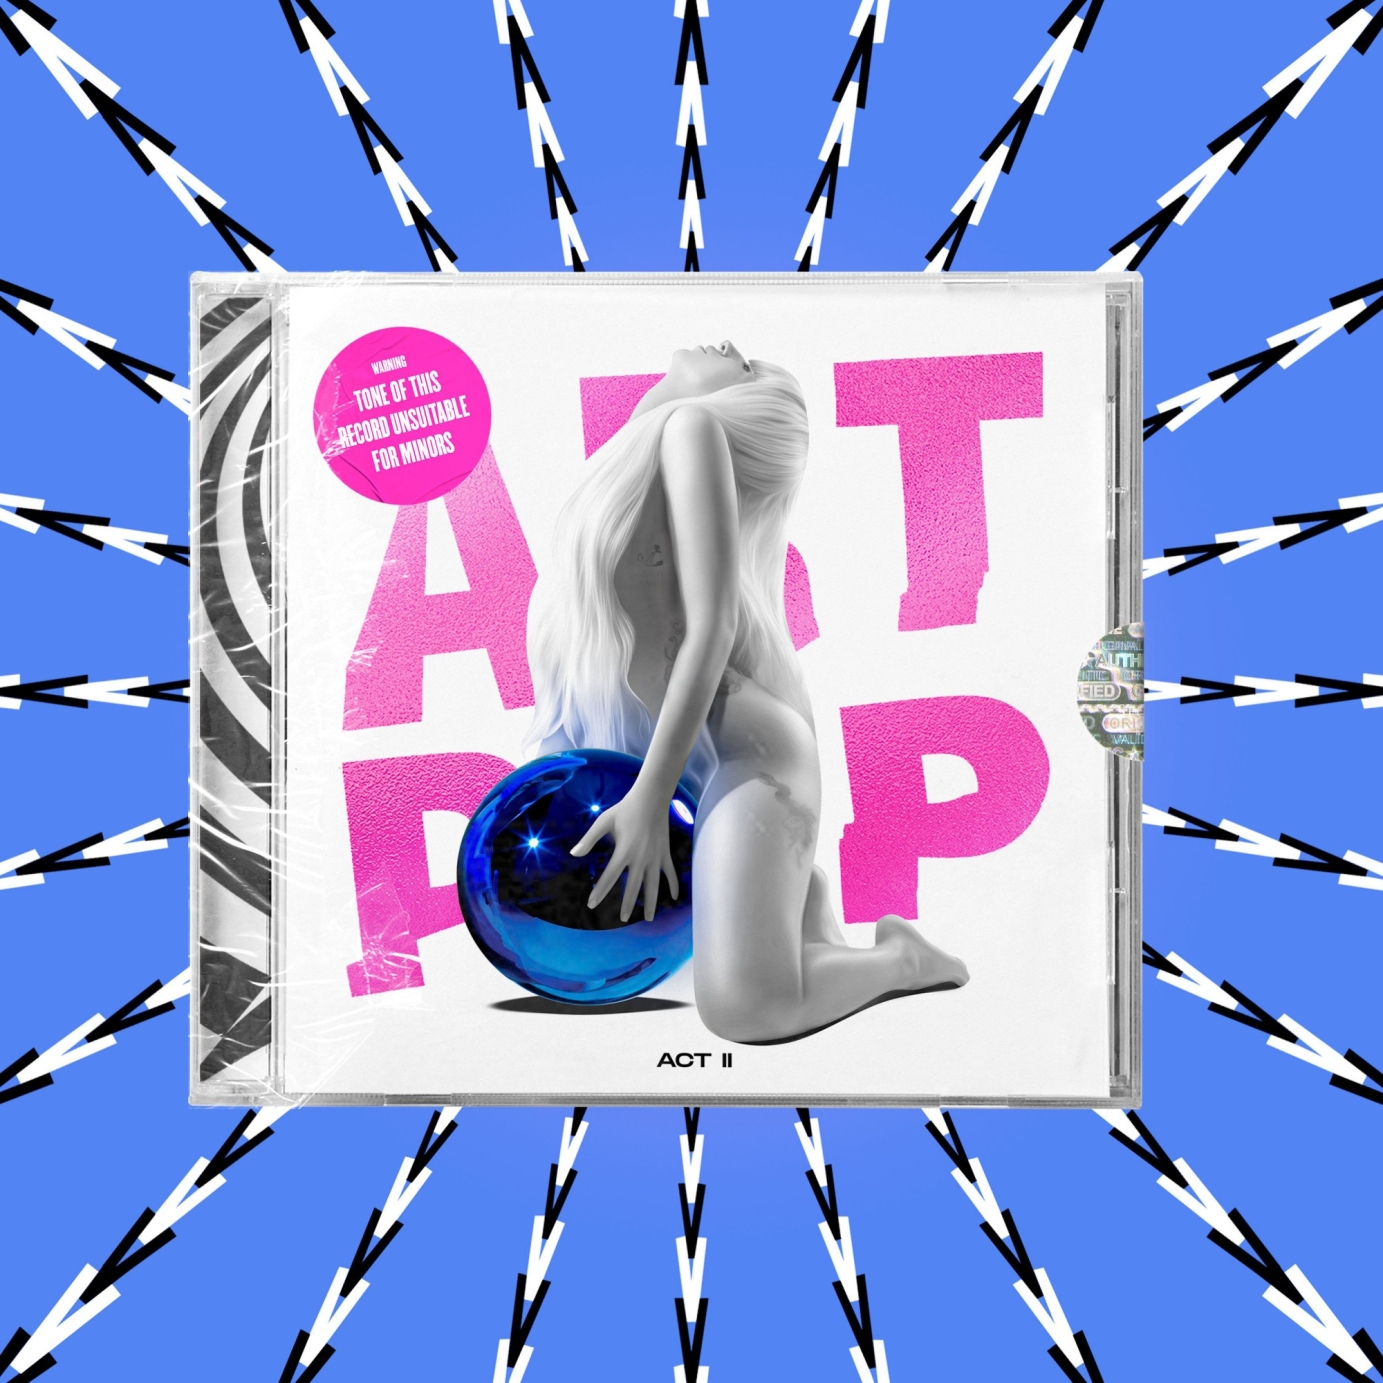 Lady Gaga - ARTPOP Act. II (Concept Cover Artwork)